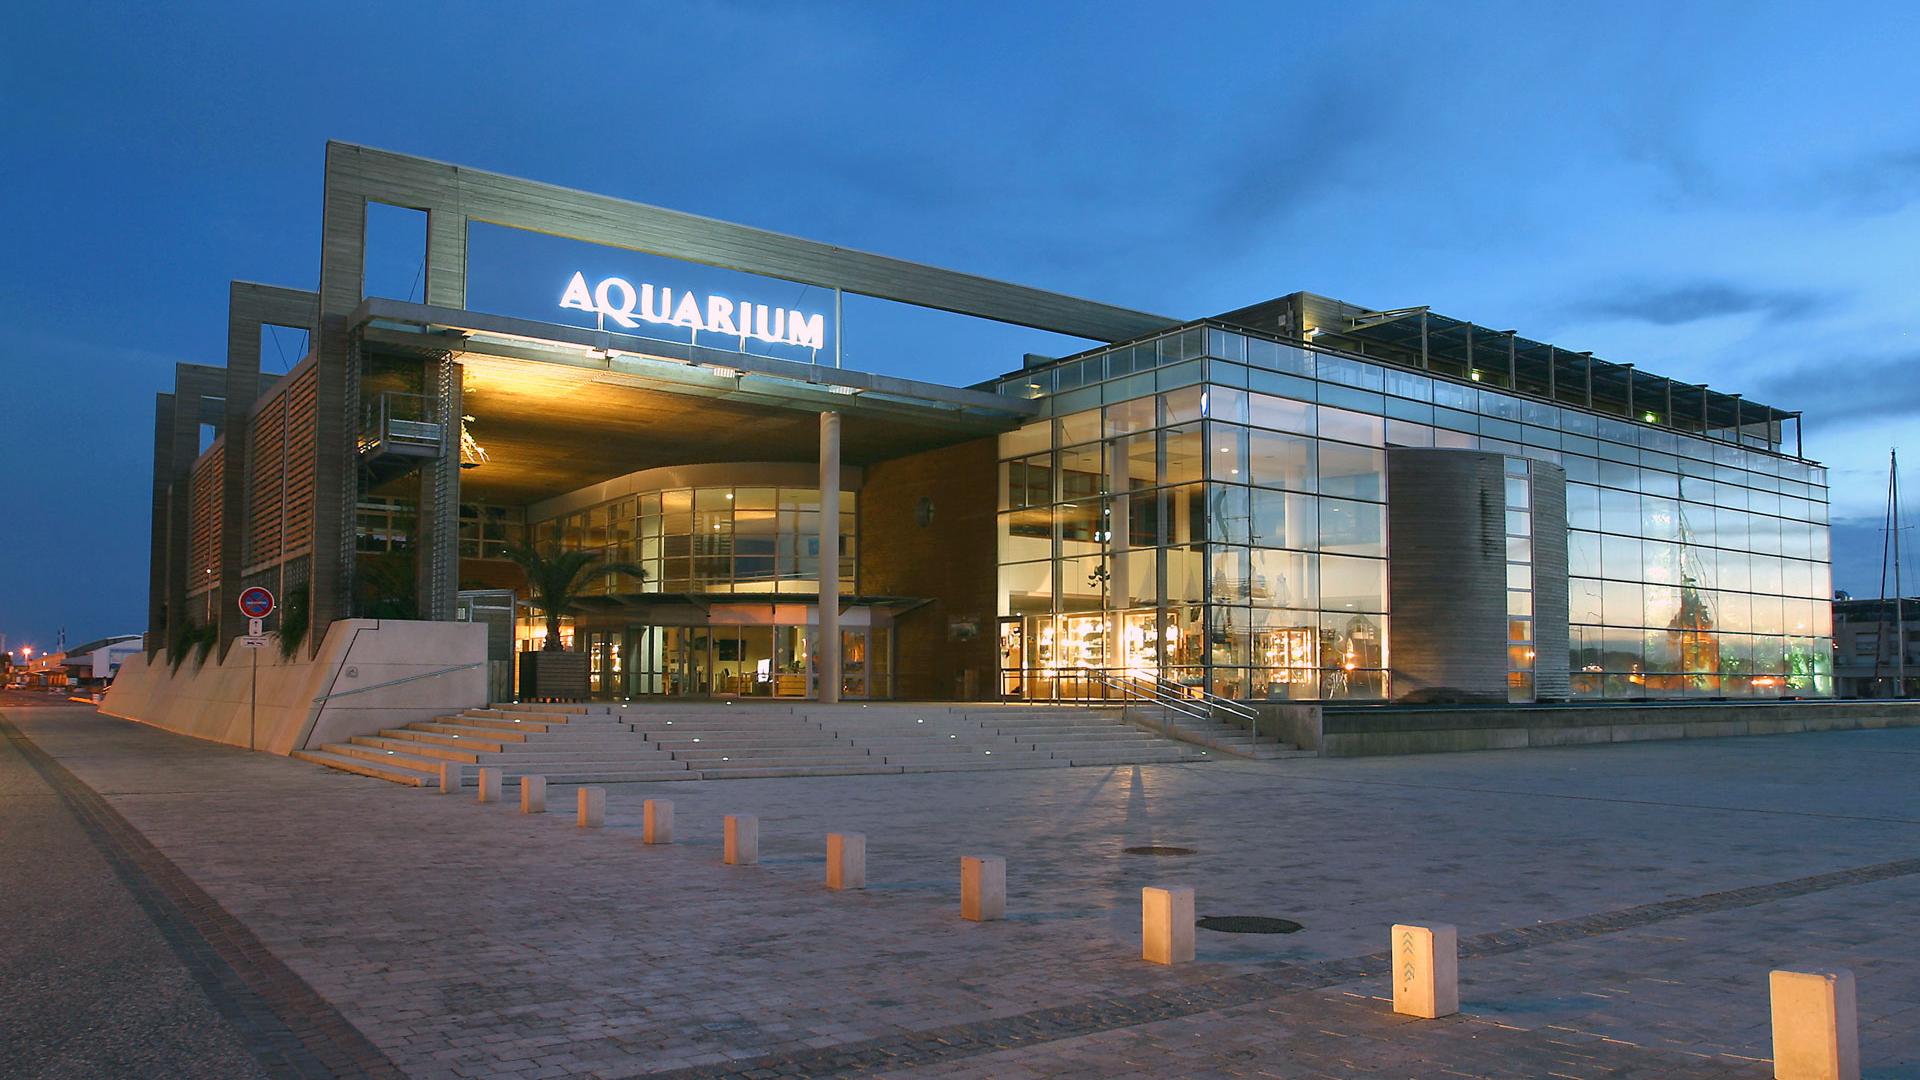 Batiment Aquarium La Rochelle by night